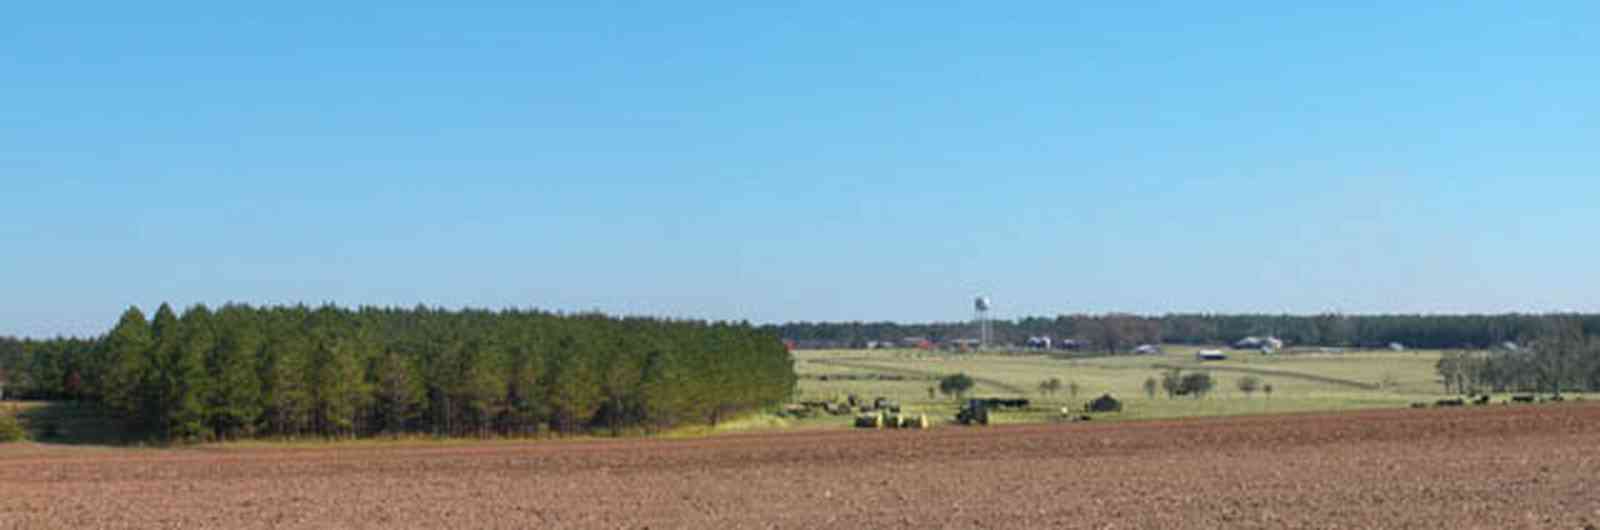 Walnut-Hill:-Cunningham-Farm_00.jpg:  pine trees, cows, hay bales, water tower, farmland, farm, beef cattle, rolling hills, 